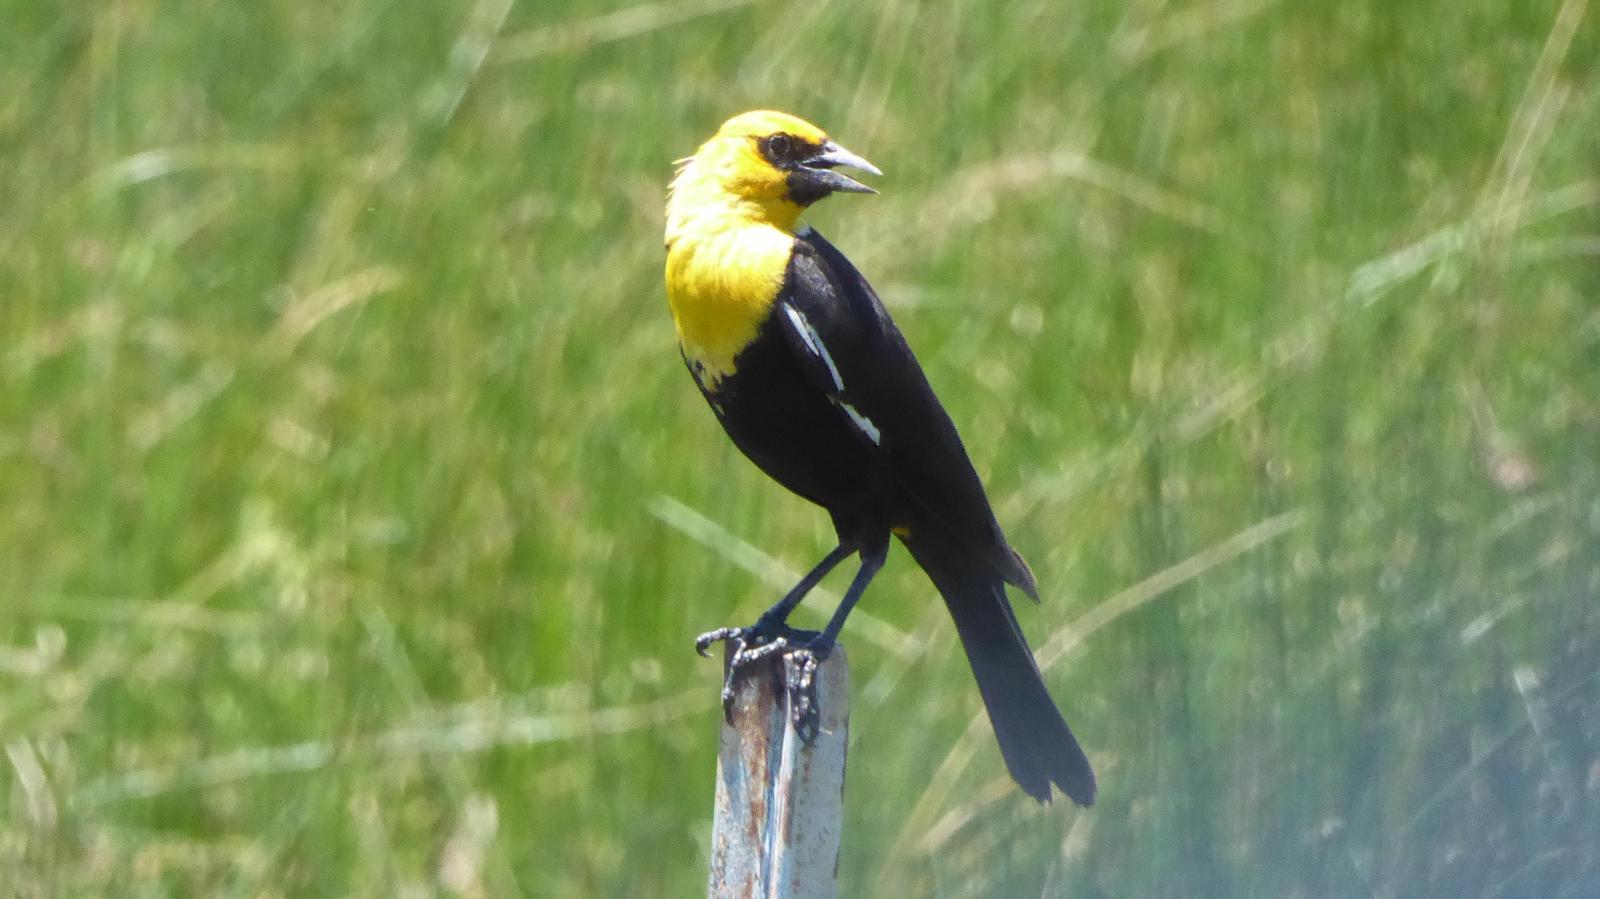 Yellow-headed Blackbird Photo by Daliel Leite